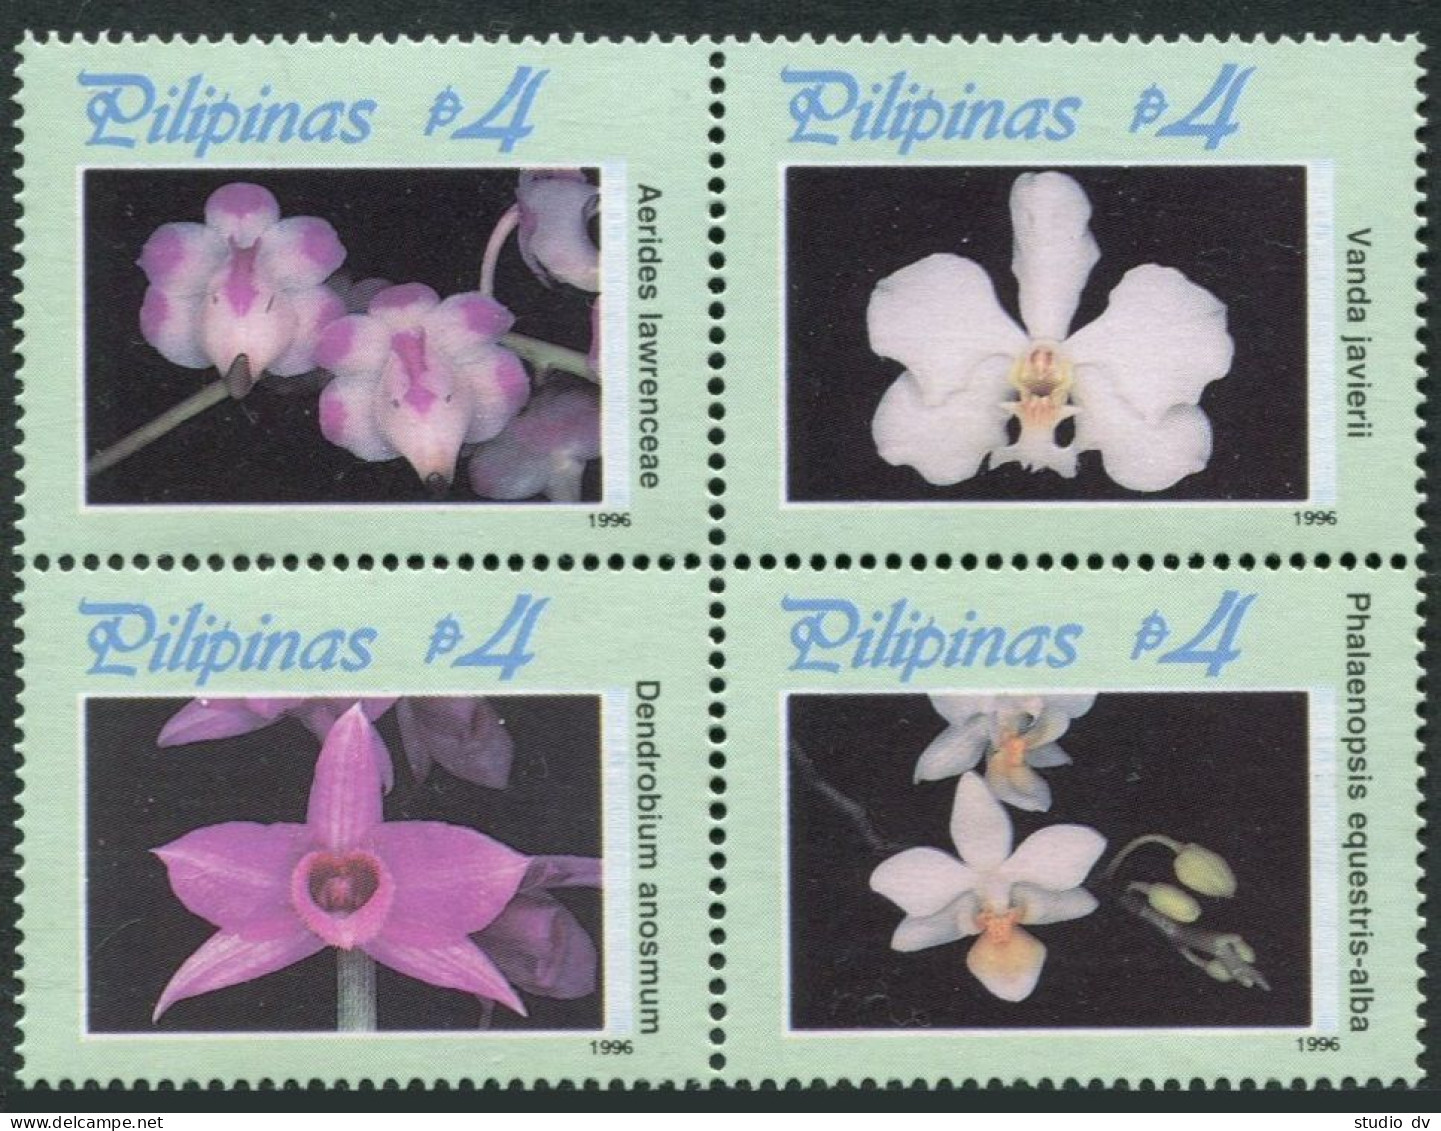 Philippines 2428-2429 Ad Block,2430 Sheet,MNH. Orchids.ASEANPEX-1996. - Philippinen